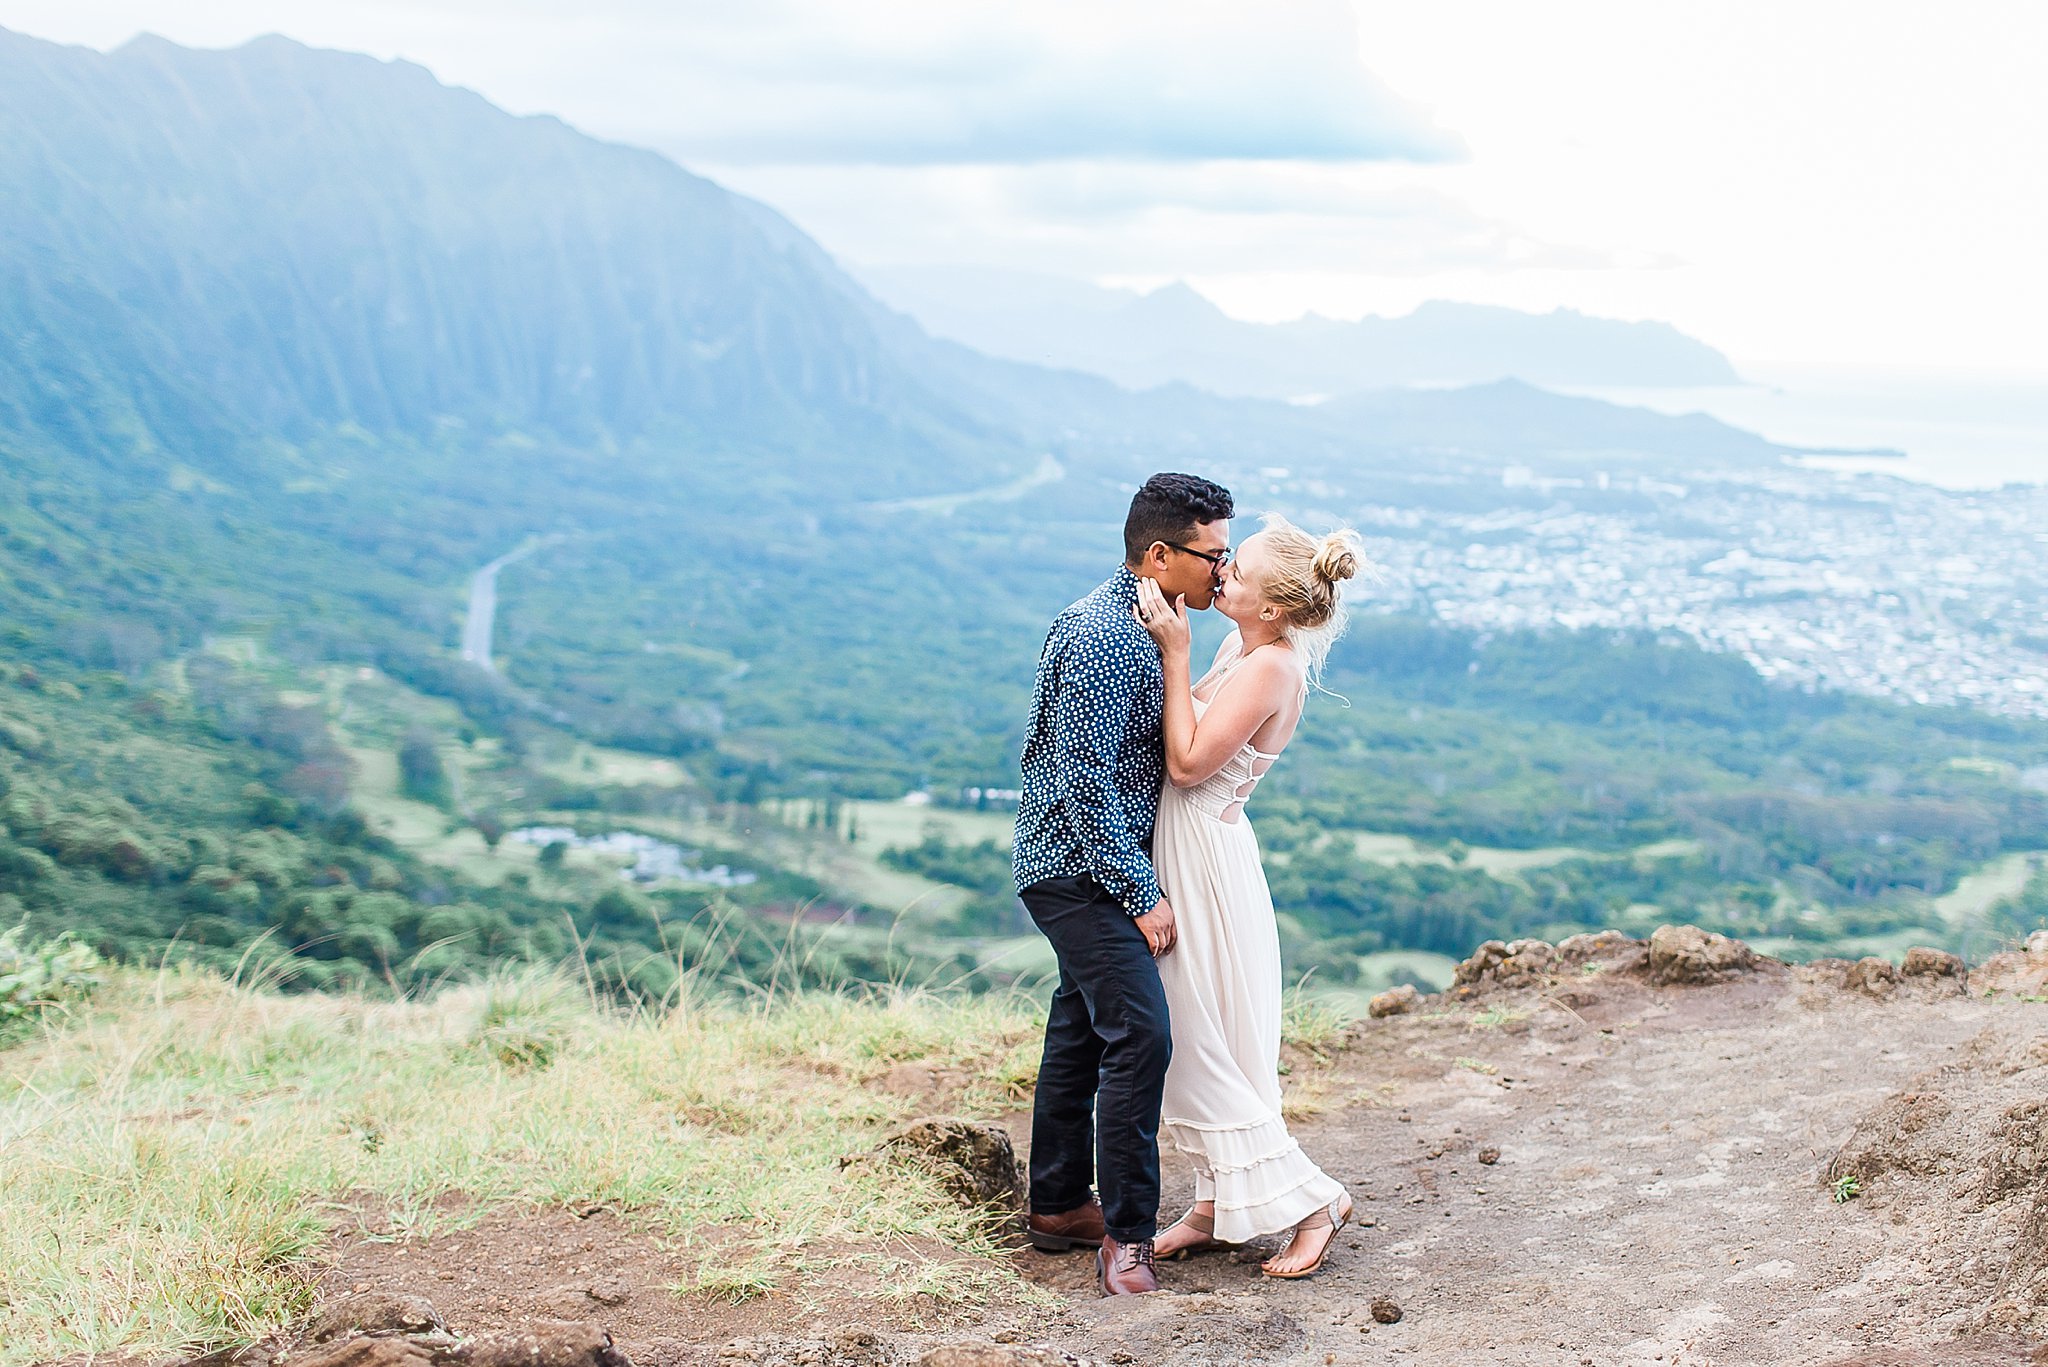 Hawaii couples photography